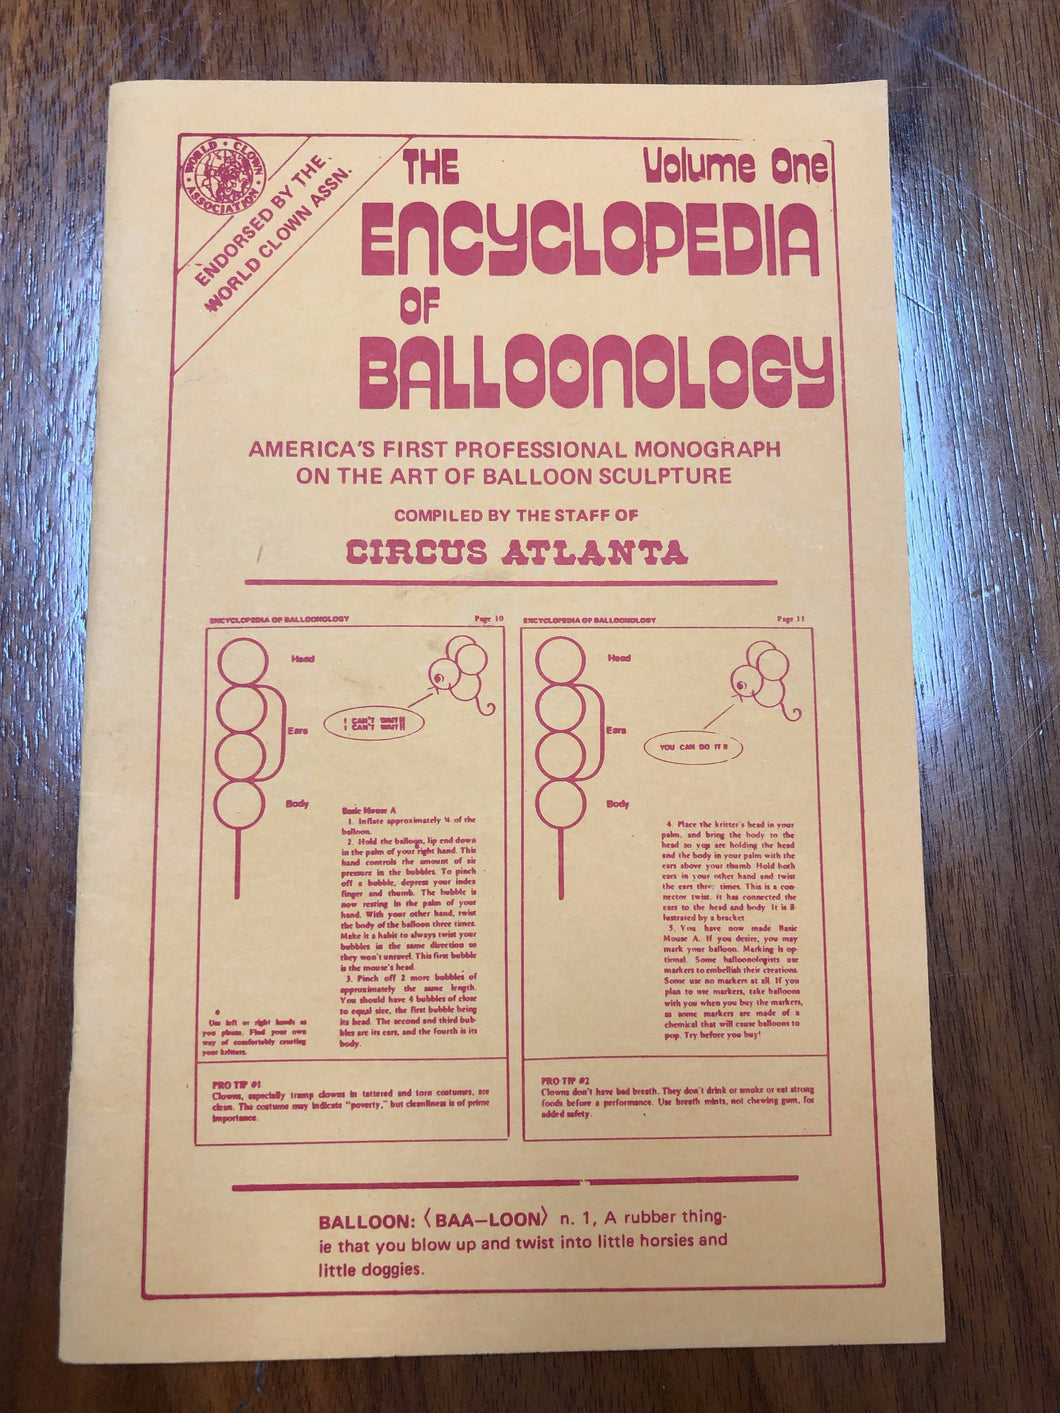 The Encyclopedia of Balloonology - Volume One